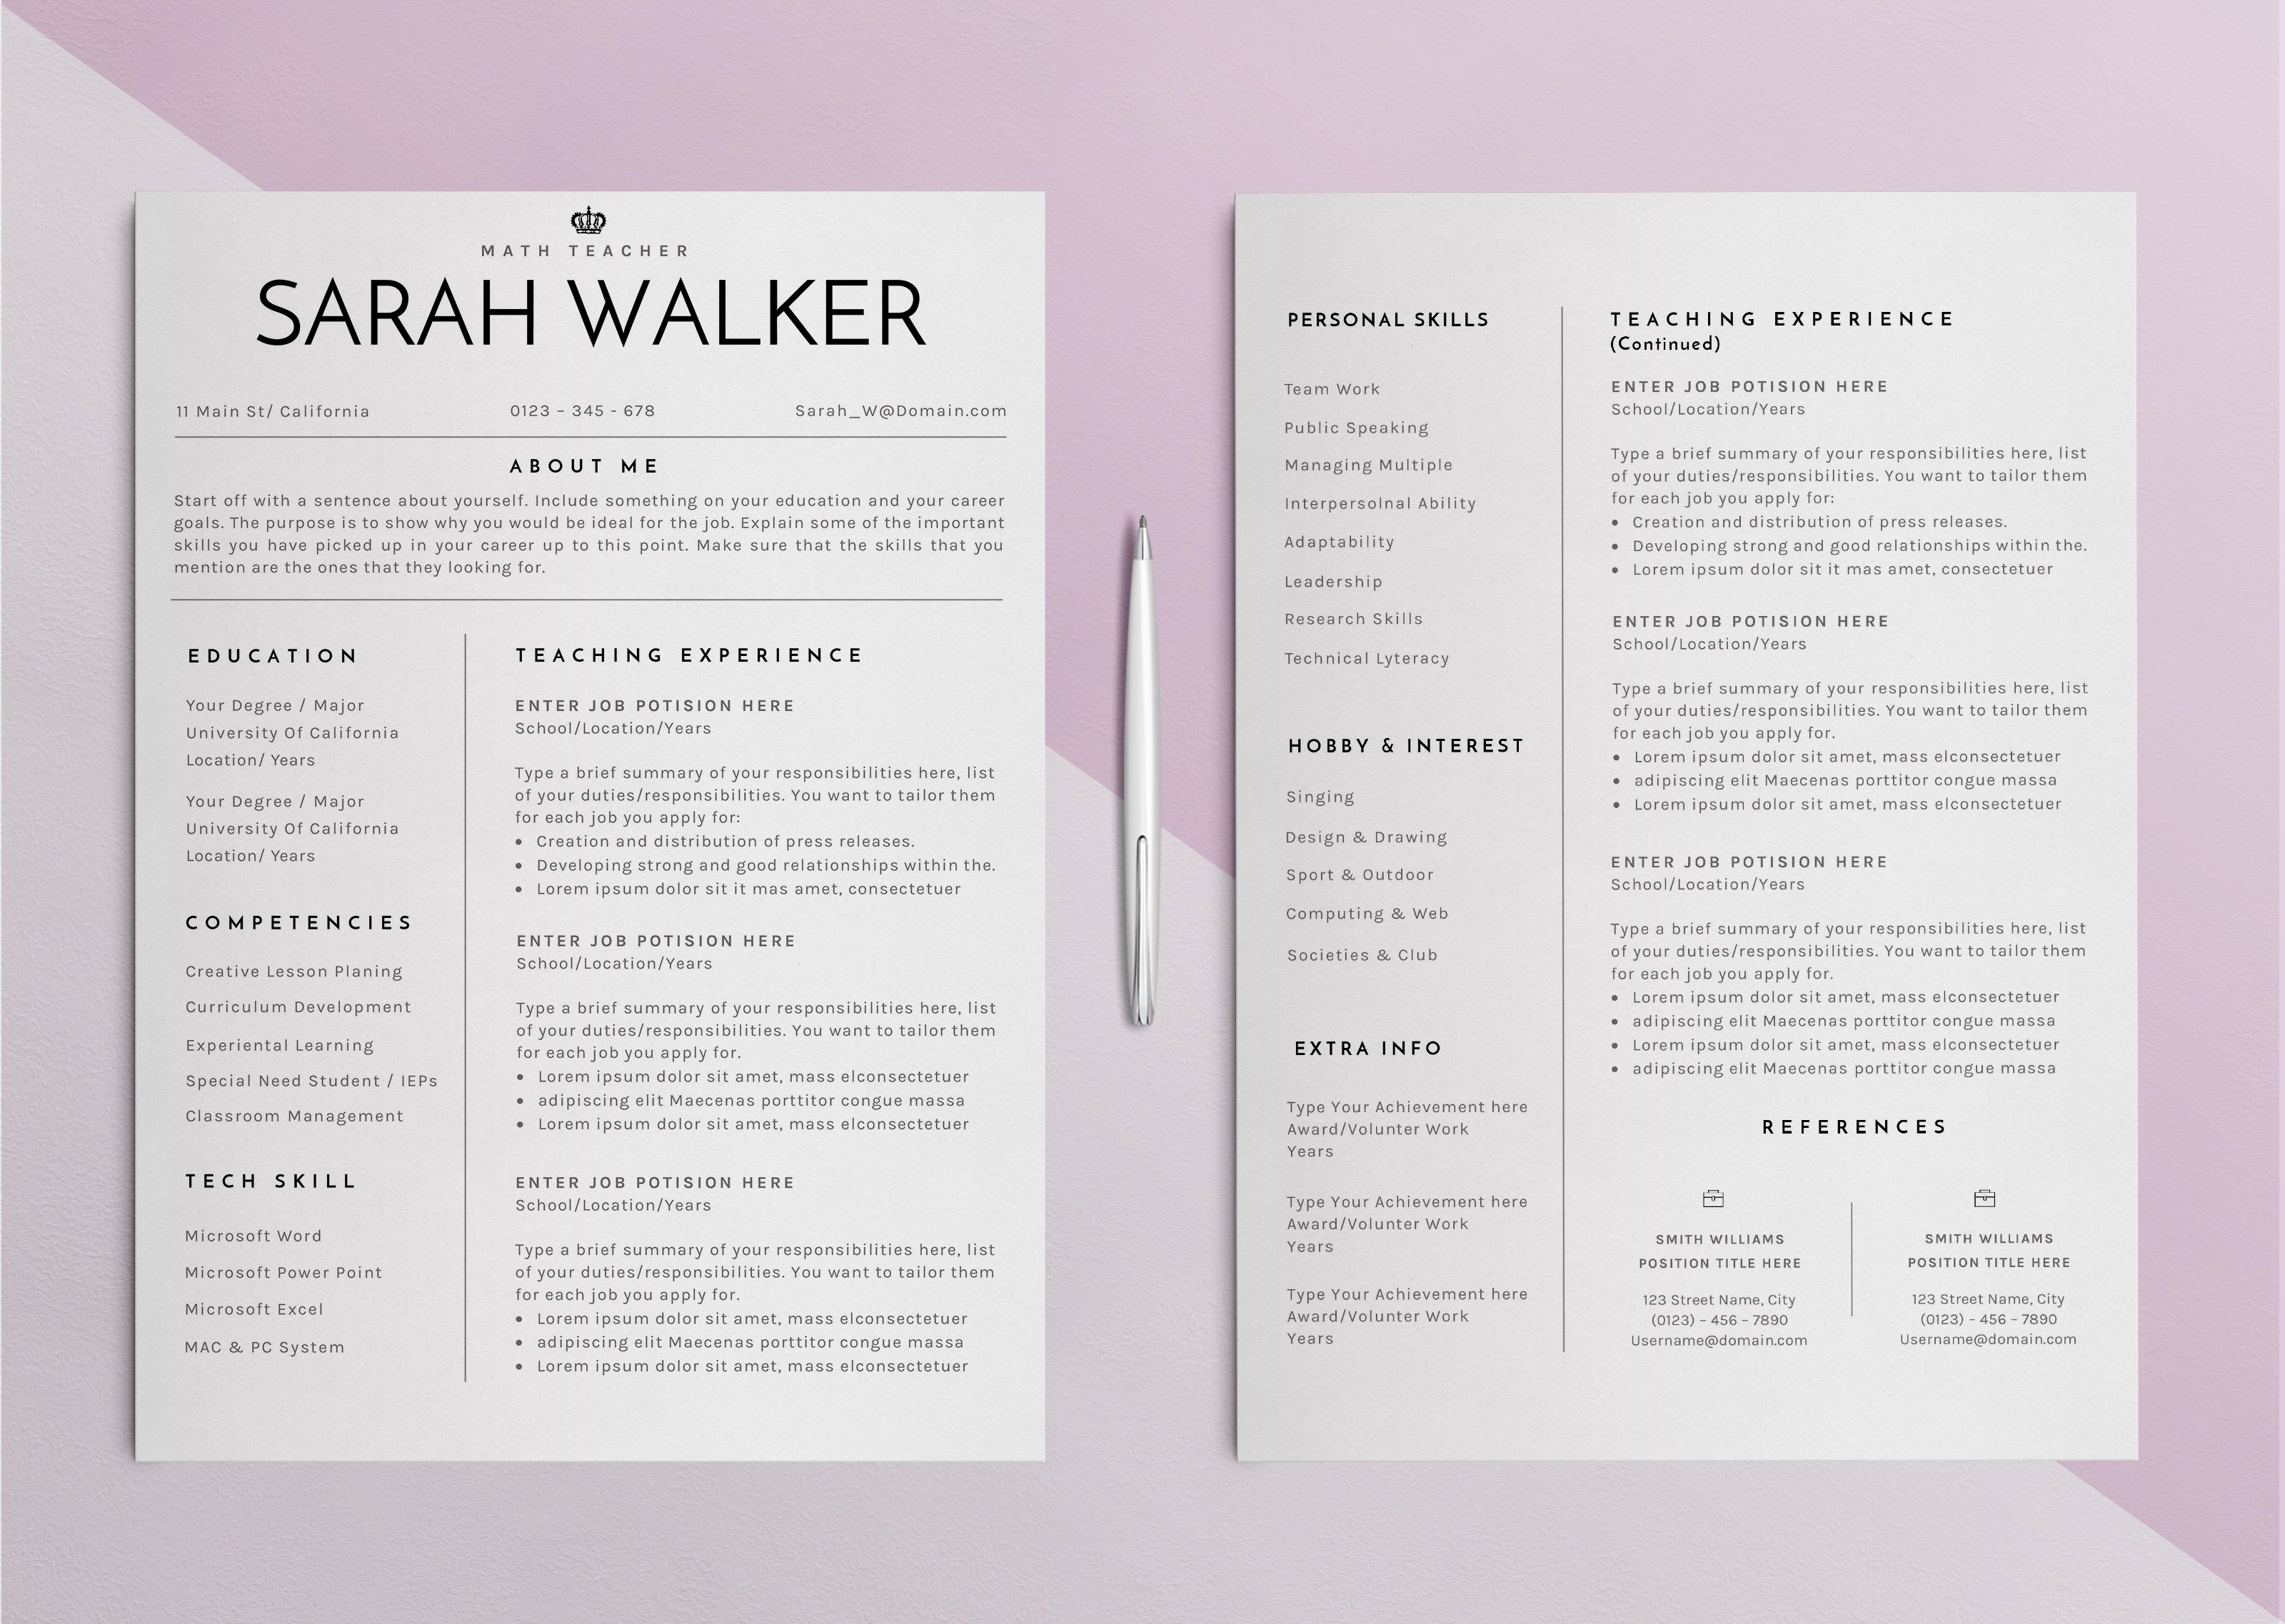 Resume / CV Teacher Edition - 2 preview image.